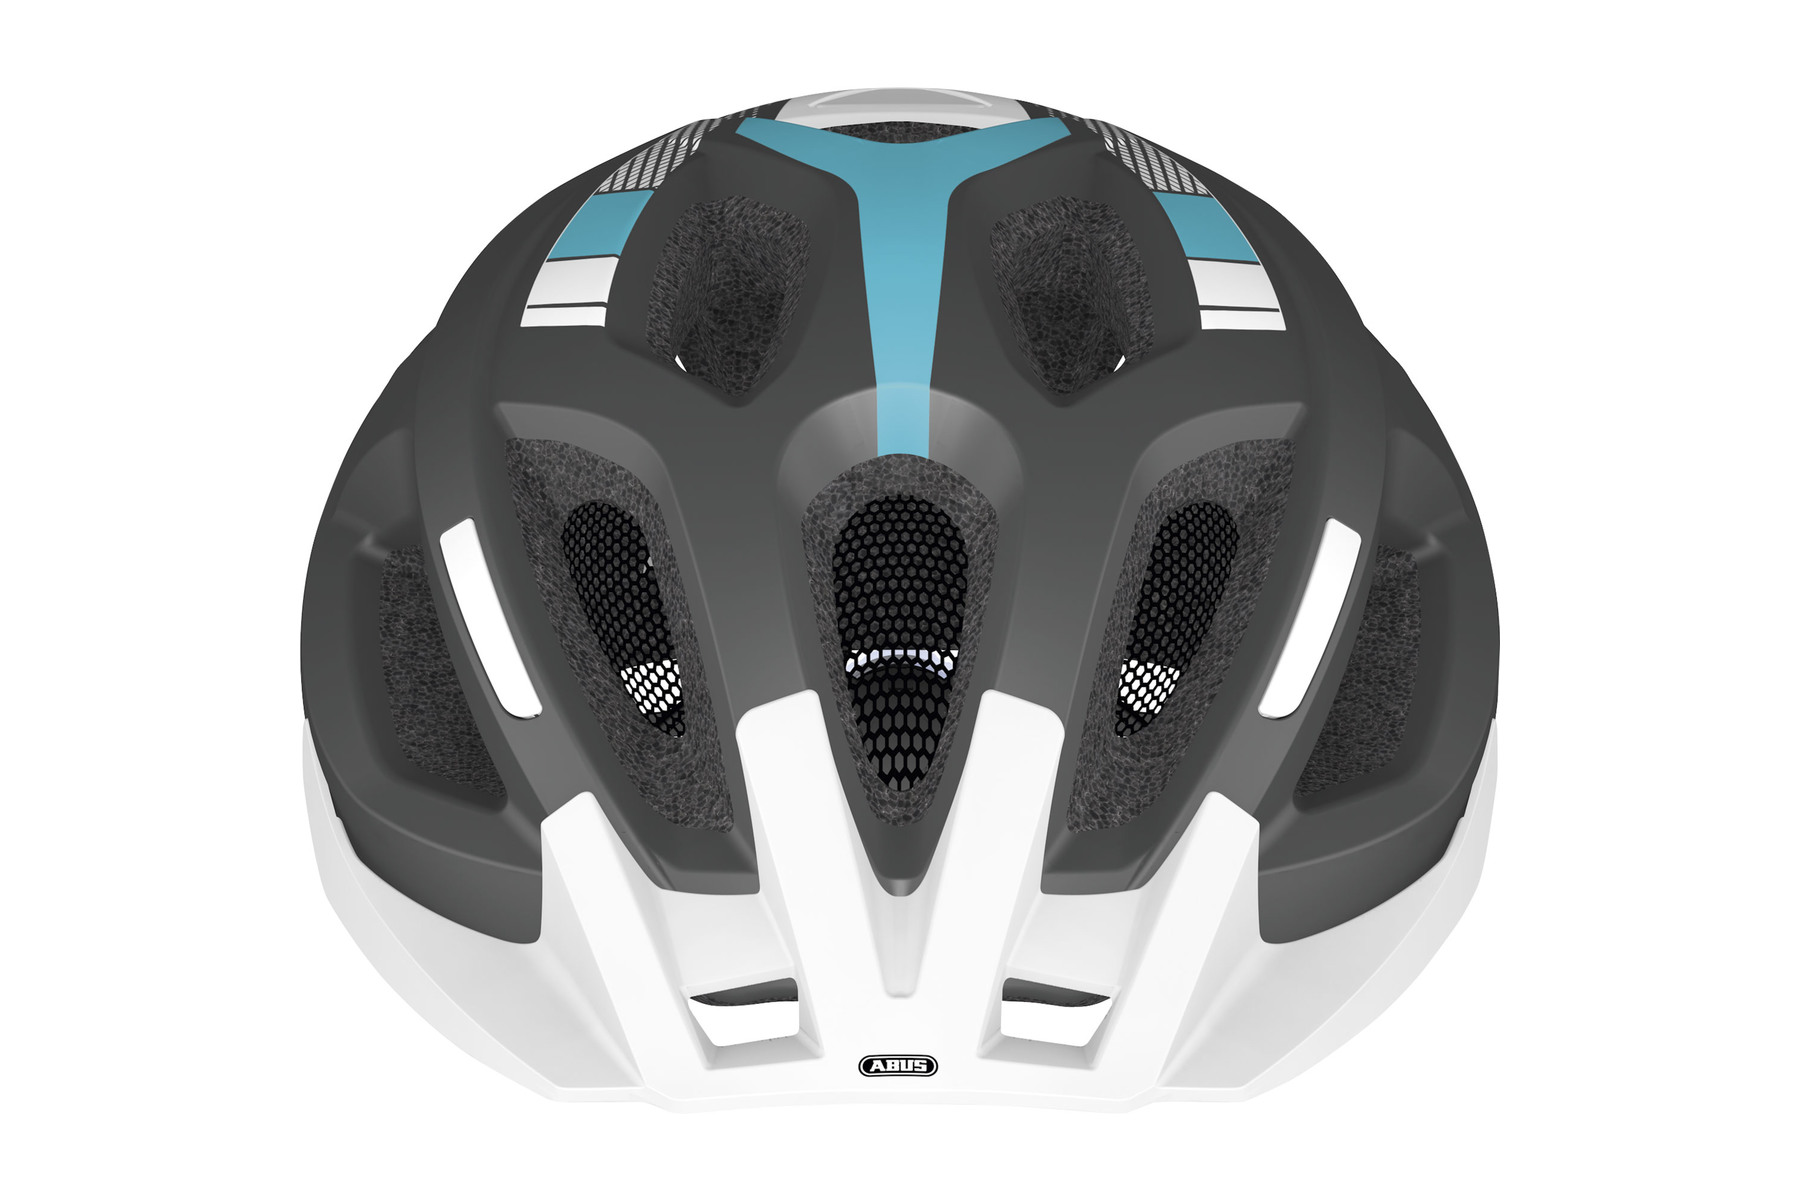 abus aduro 2.0 cycle helmet